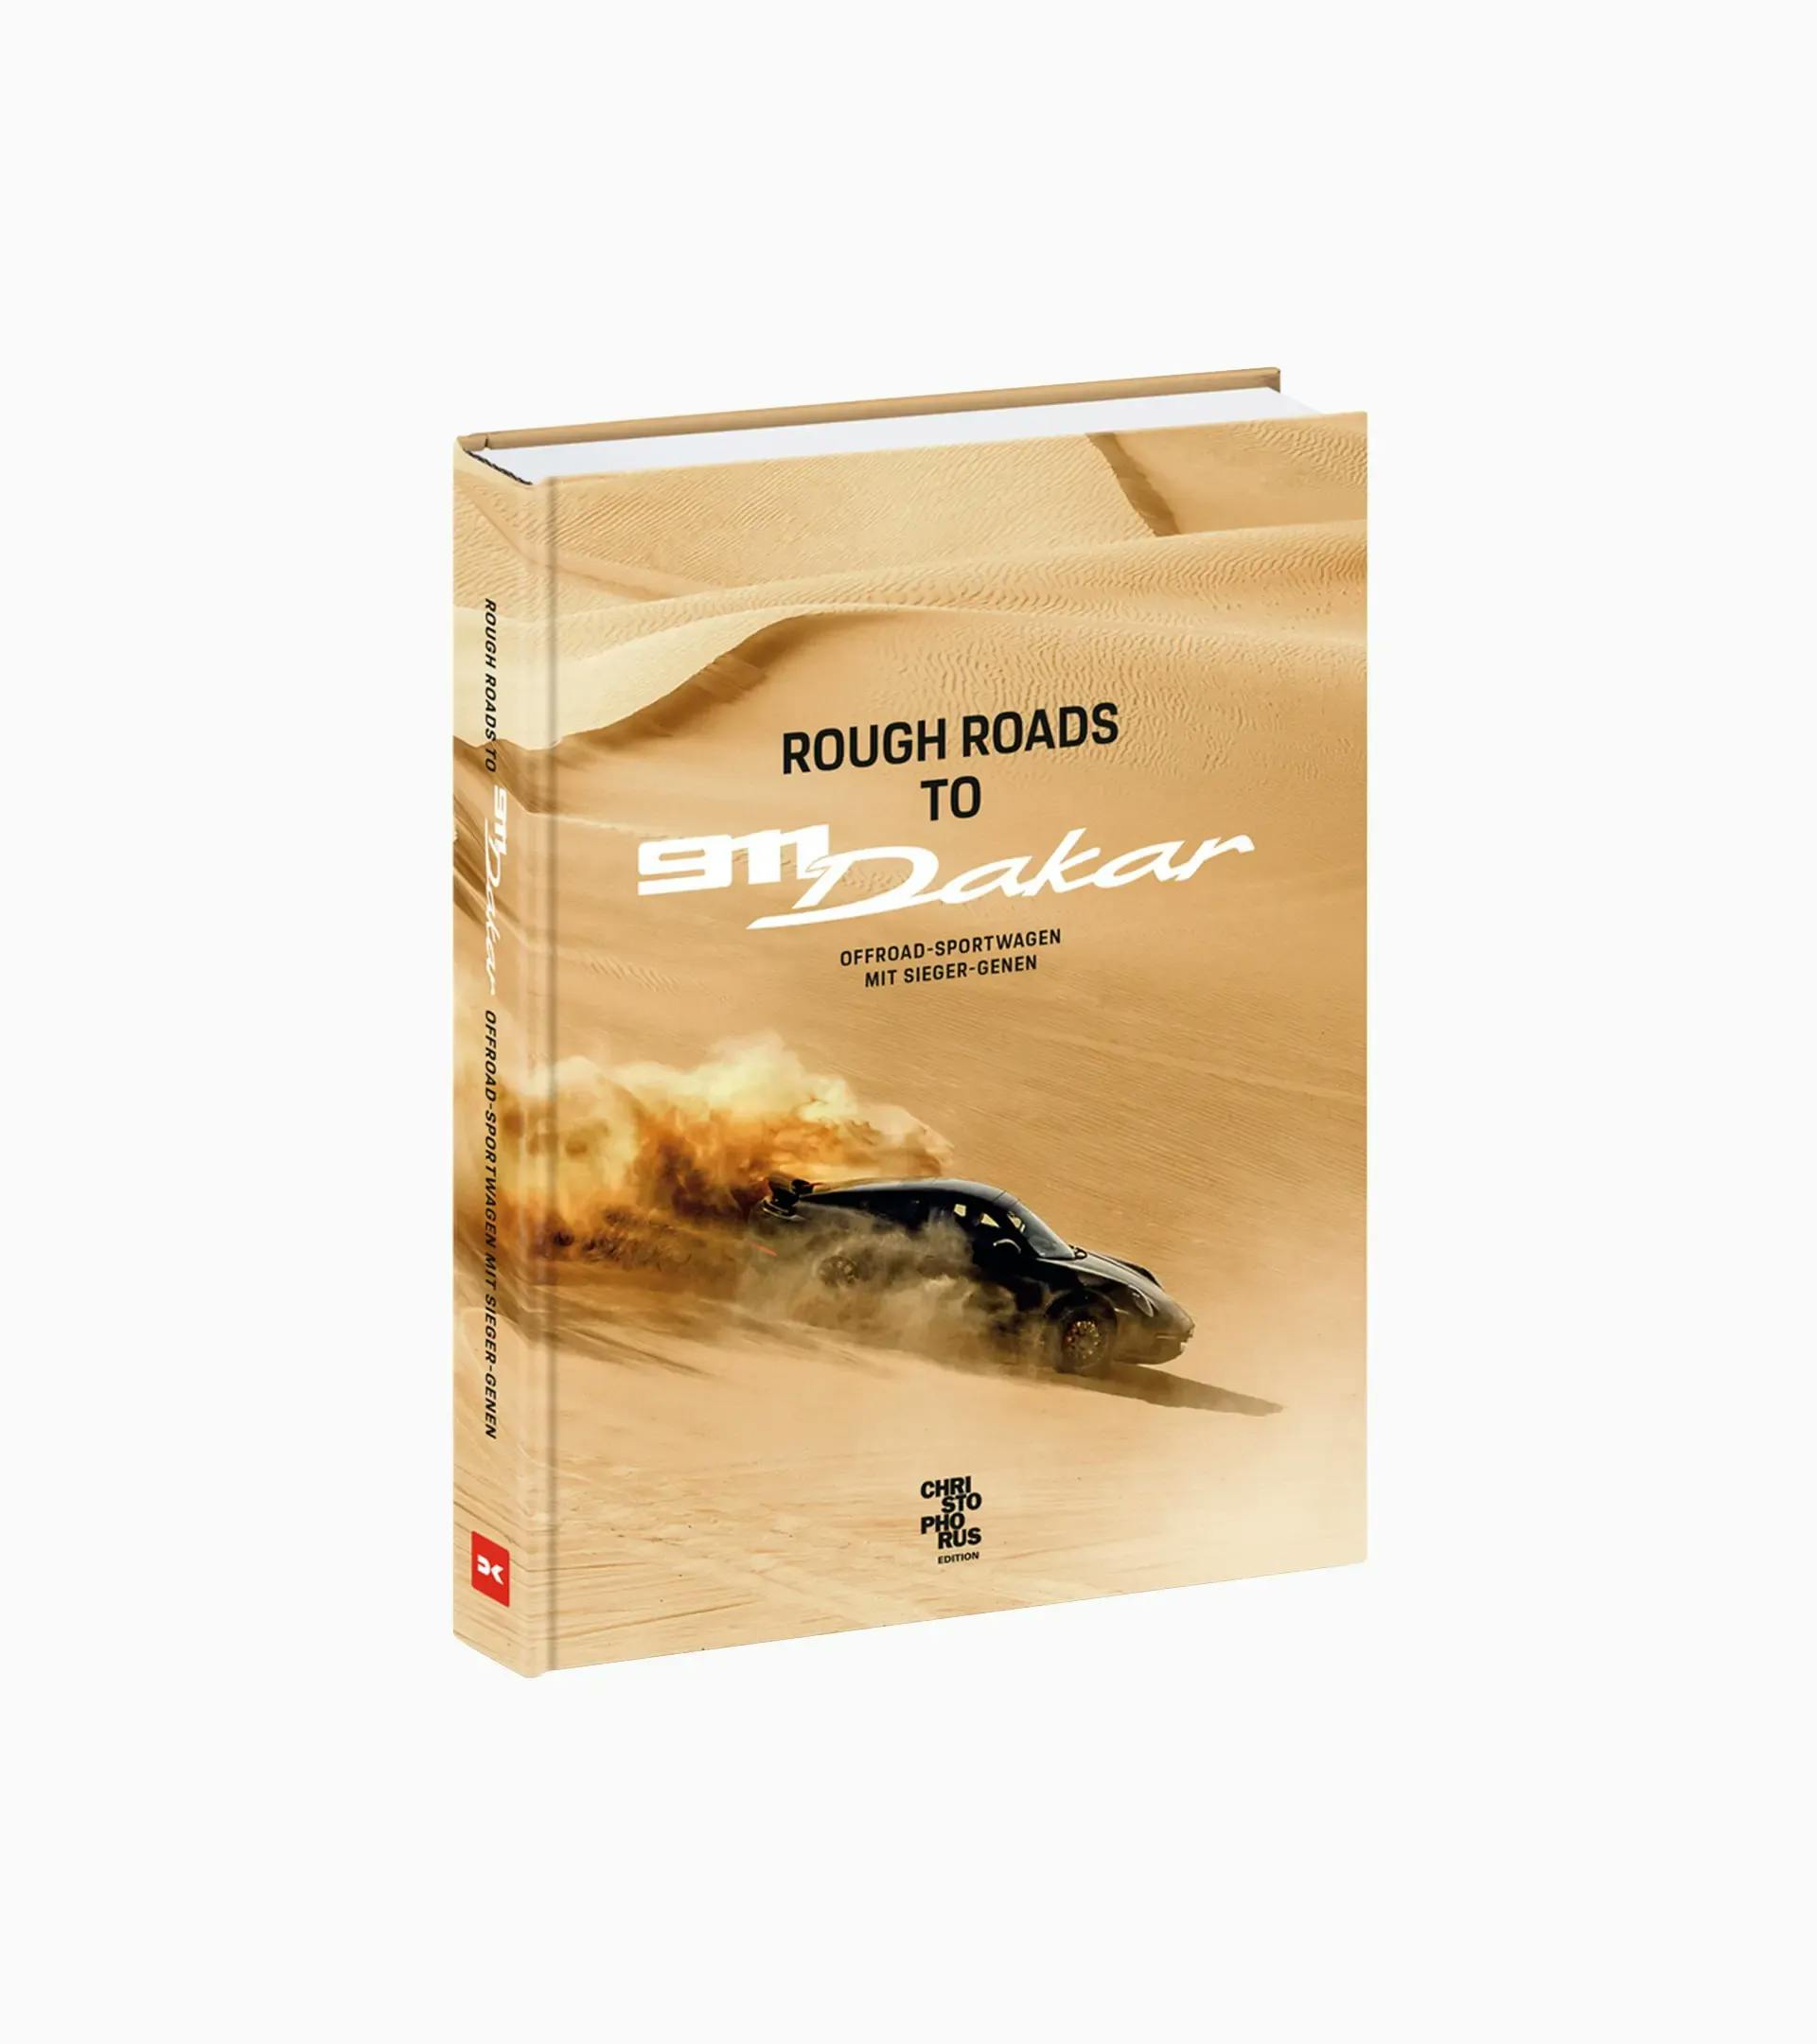 Book 'Rough Roads to 911 Dakar' 1